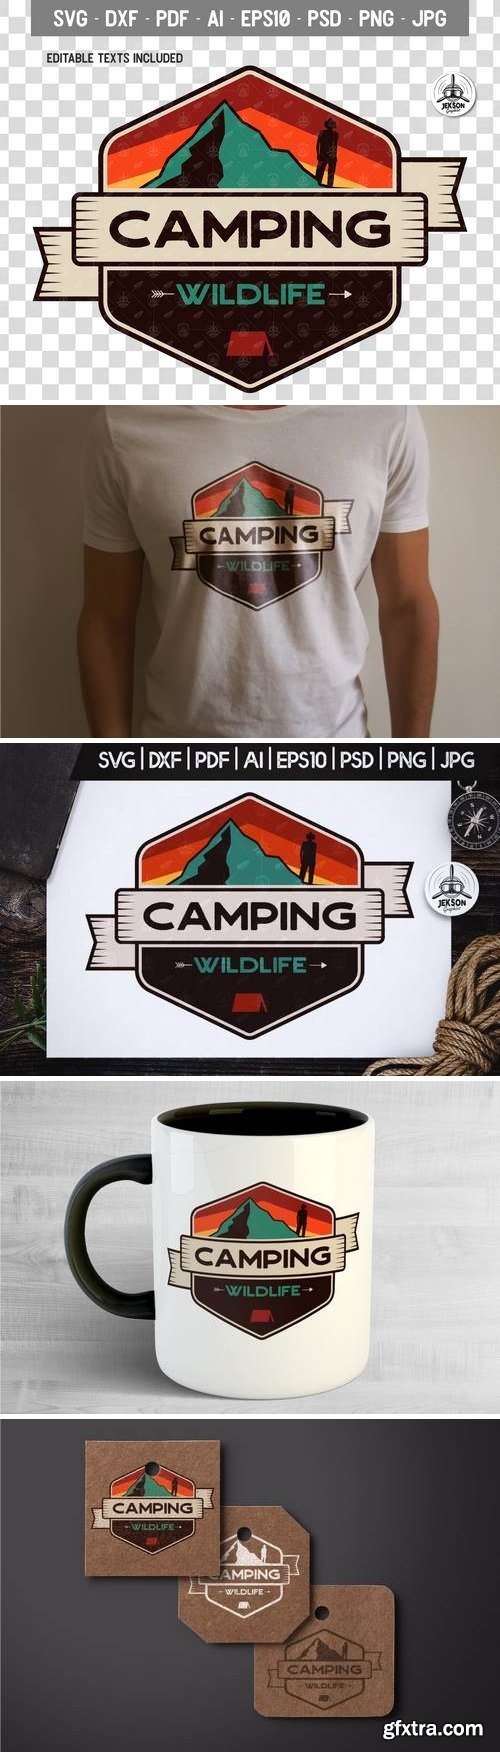 Camping Wild Badge / Vintage Travel Logo Patch SVG